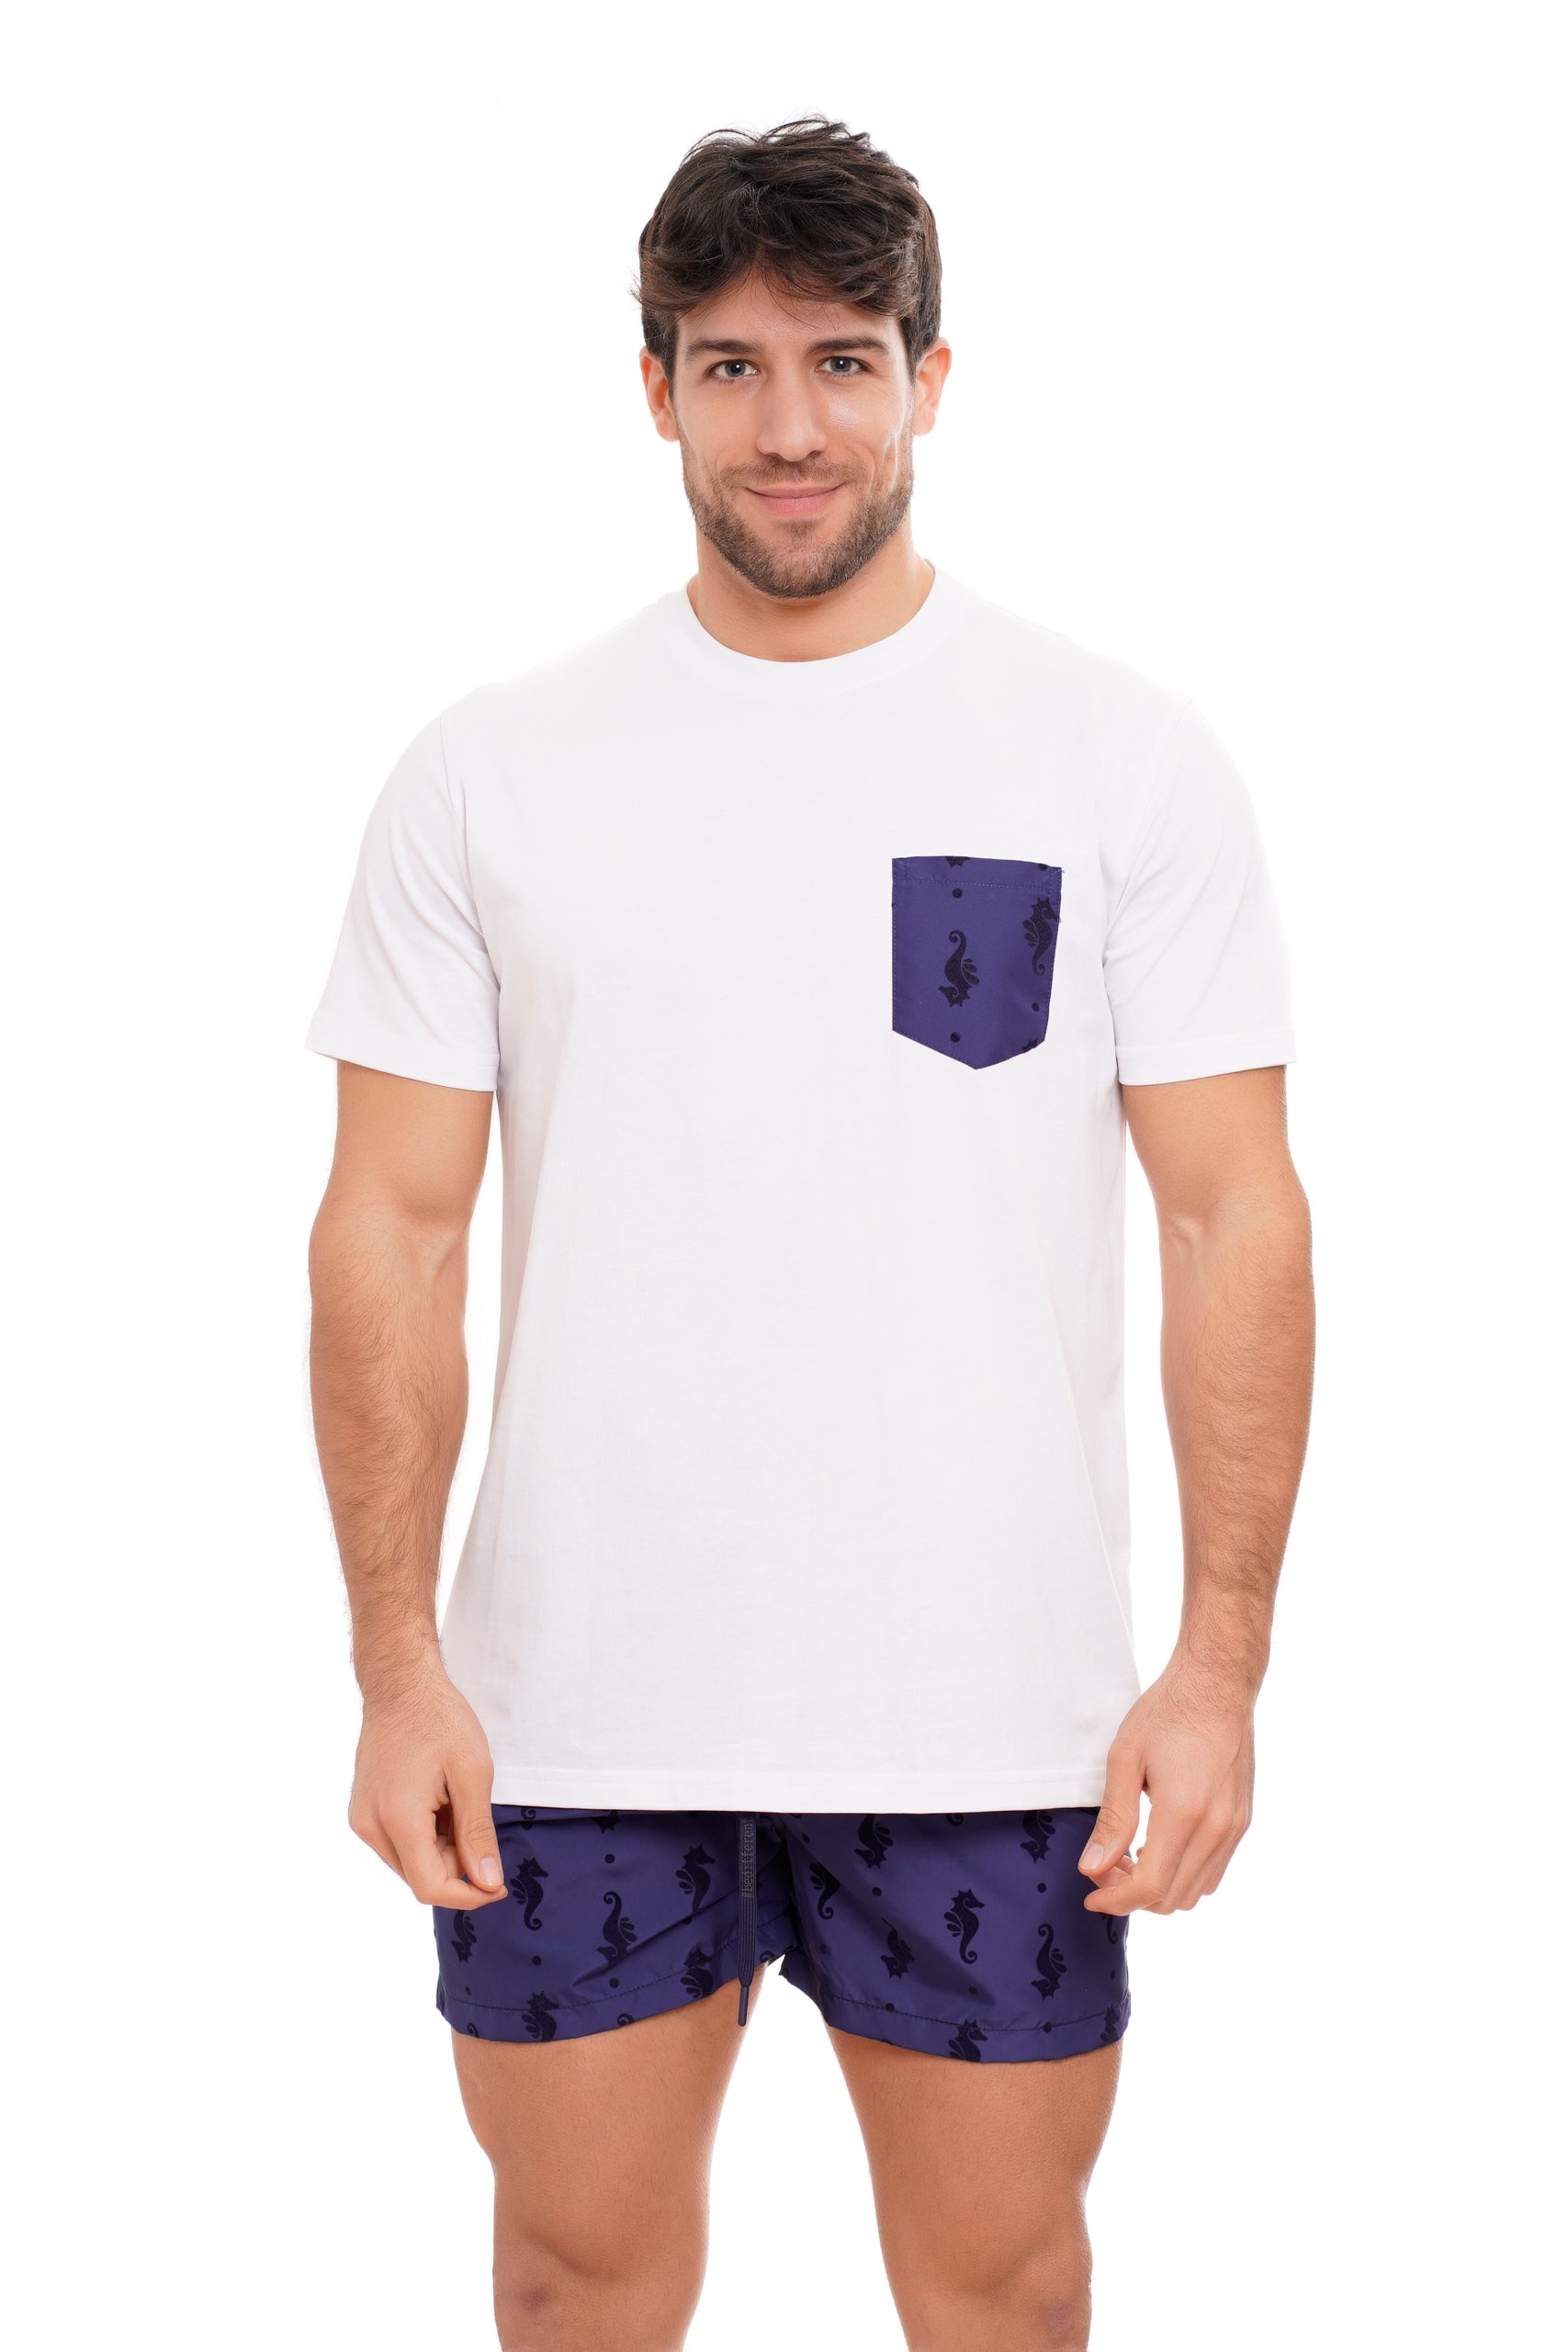 T-shirt bianca taschino flock-TASCA BLU CAV. BLU